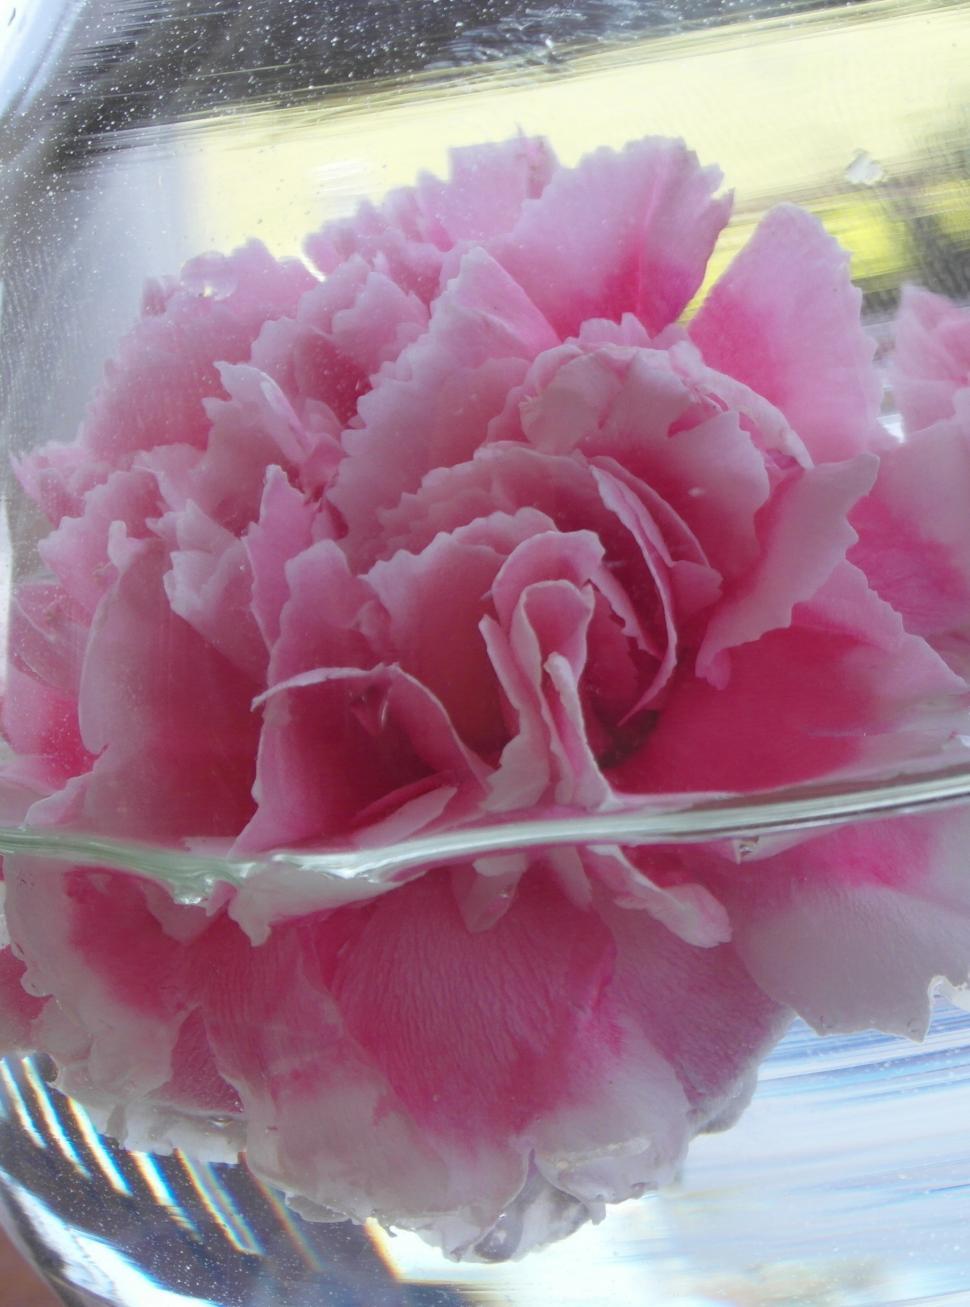 Free Image of Carnation Close-up 